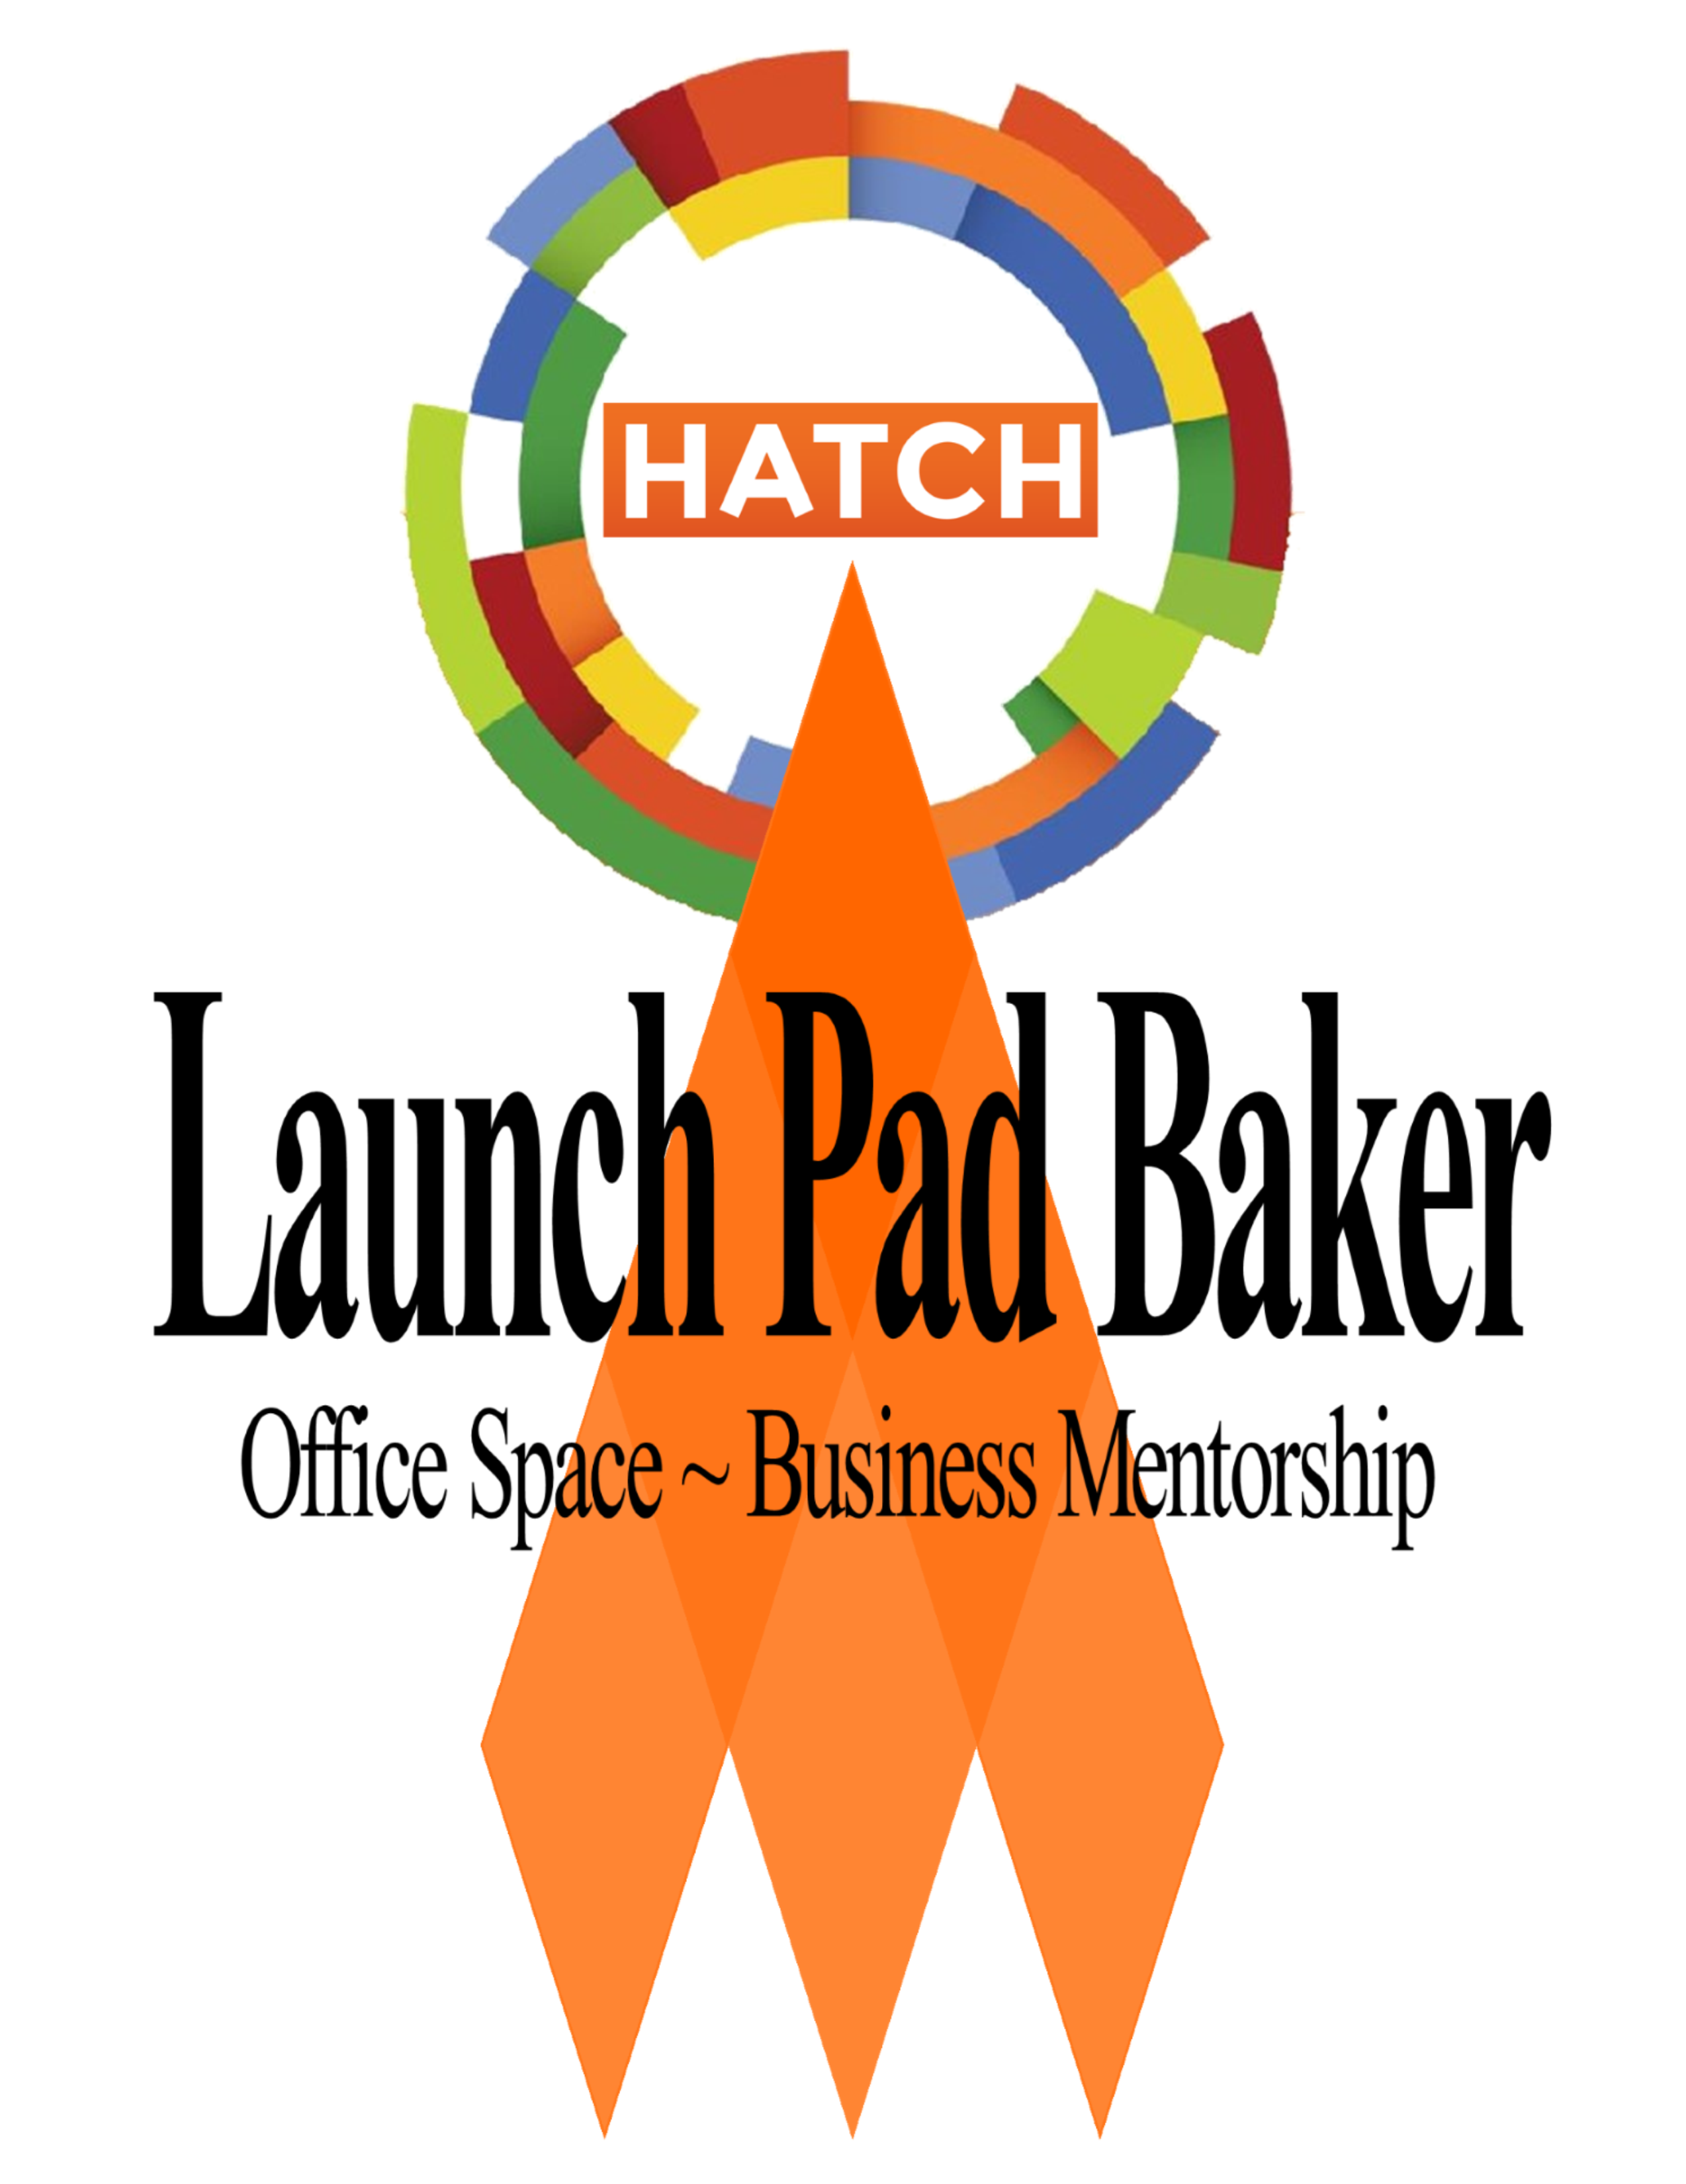 Launch Pad Baker